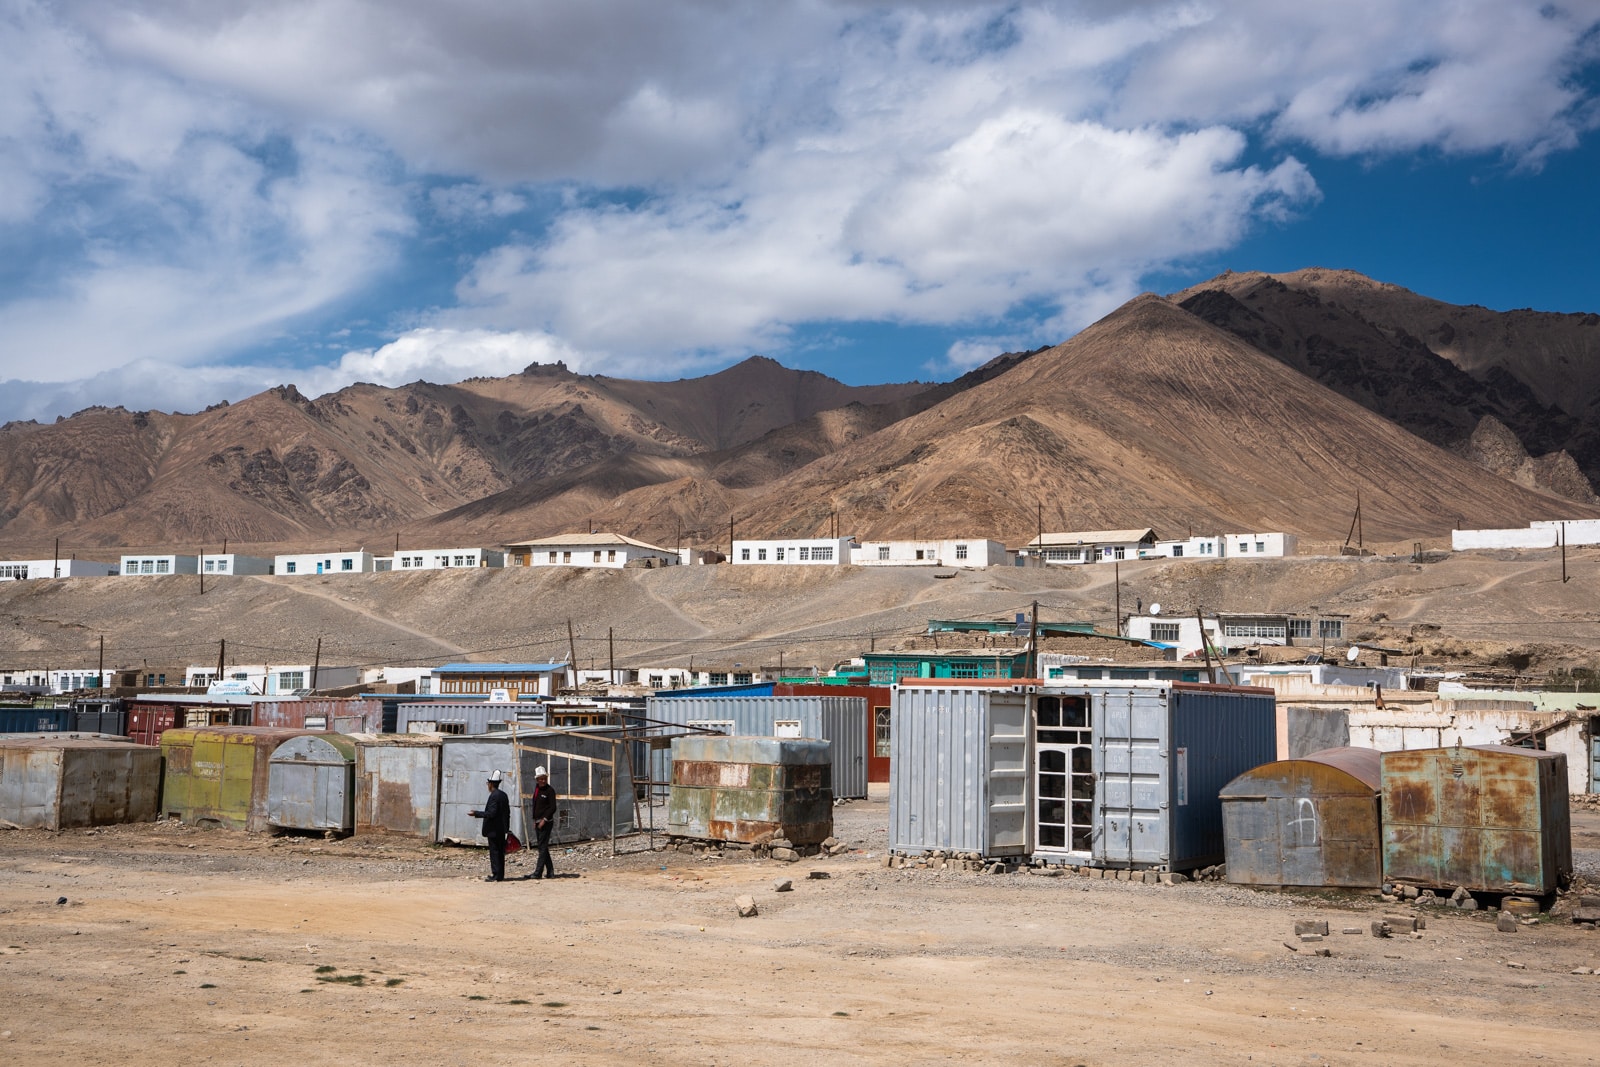 Shipping container bazaar in Murghab, Tajikistan